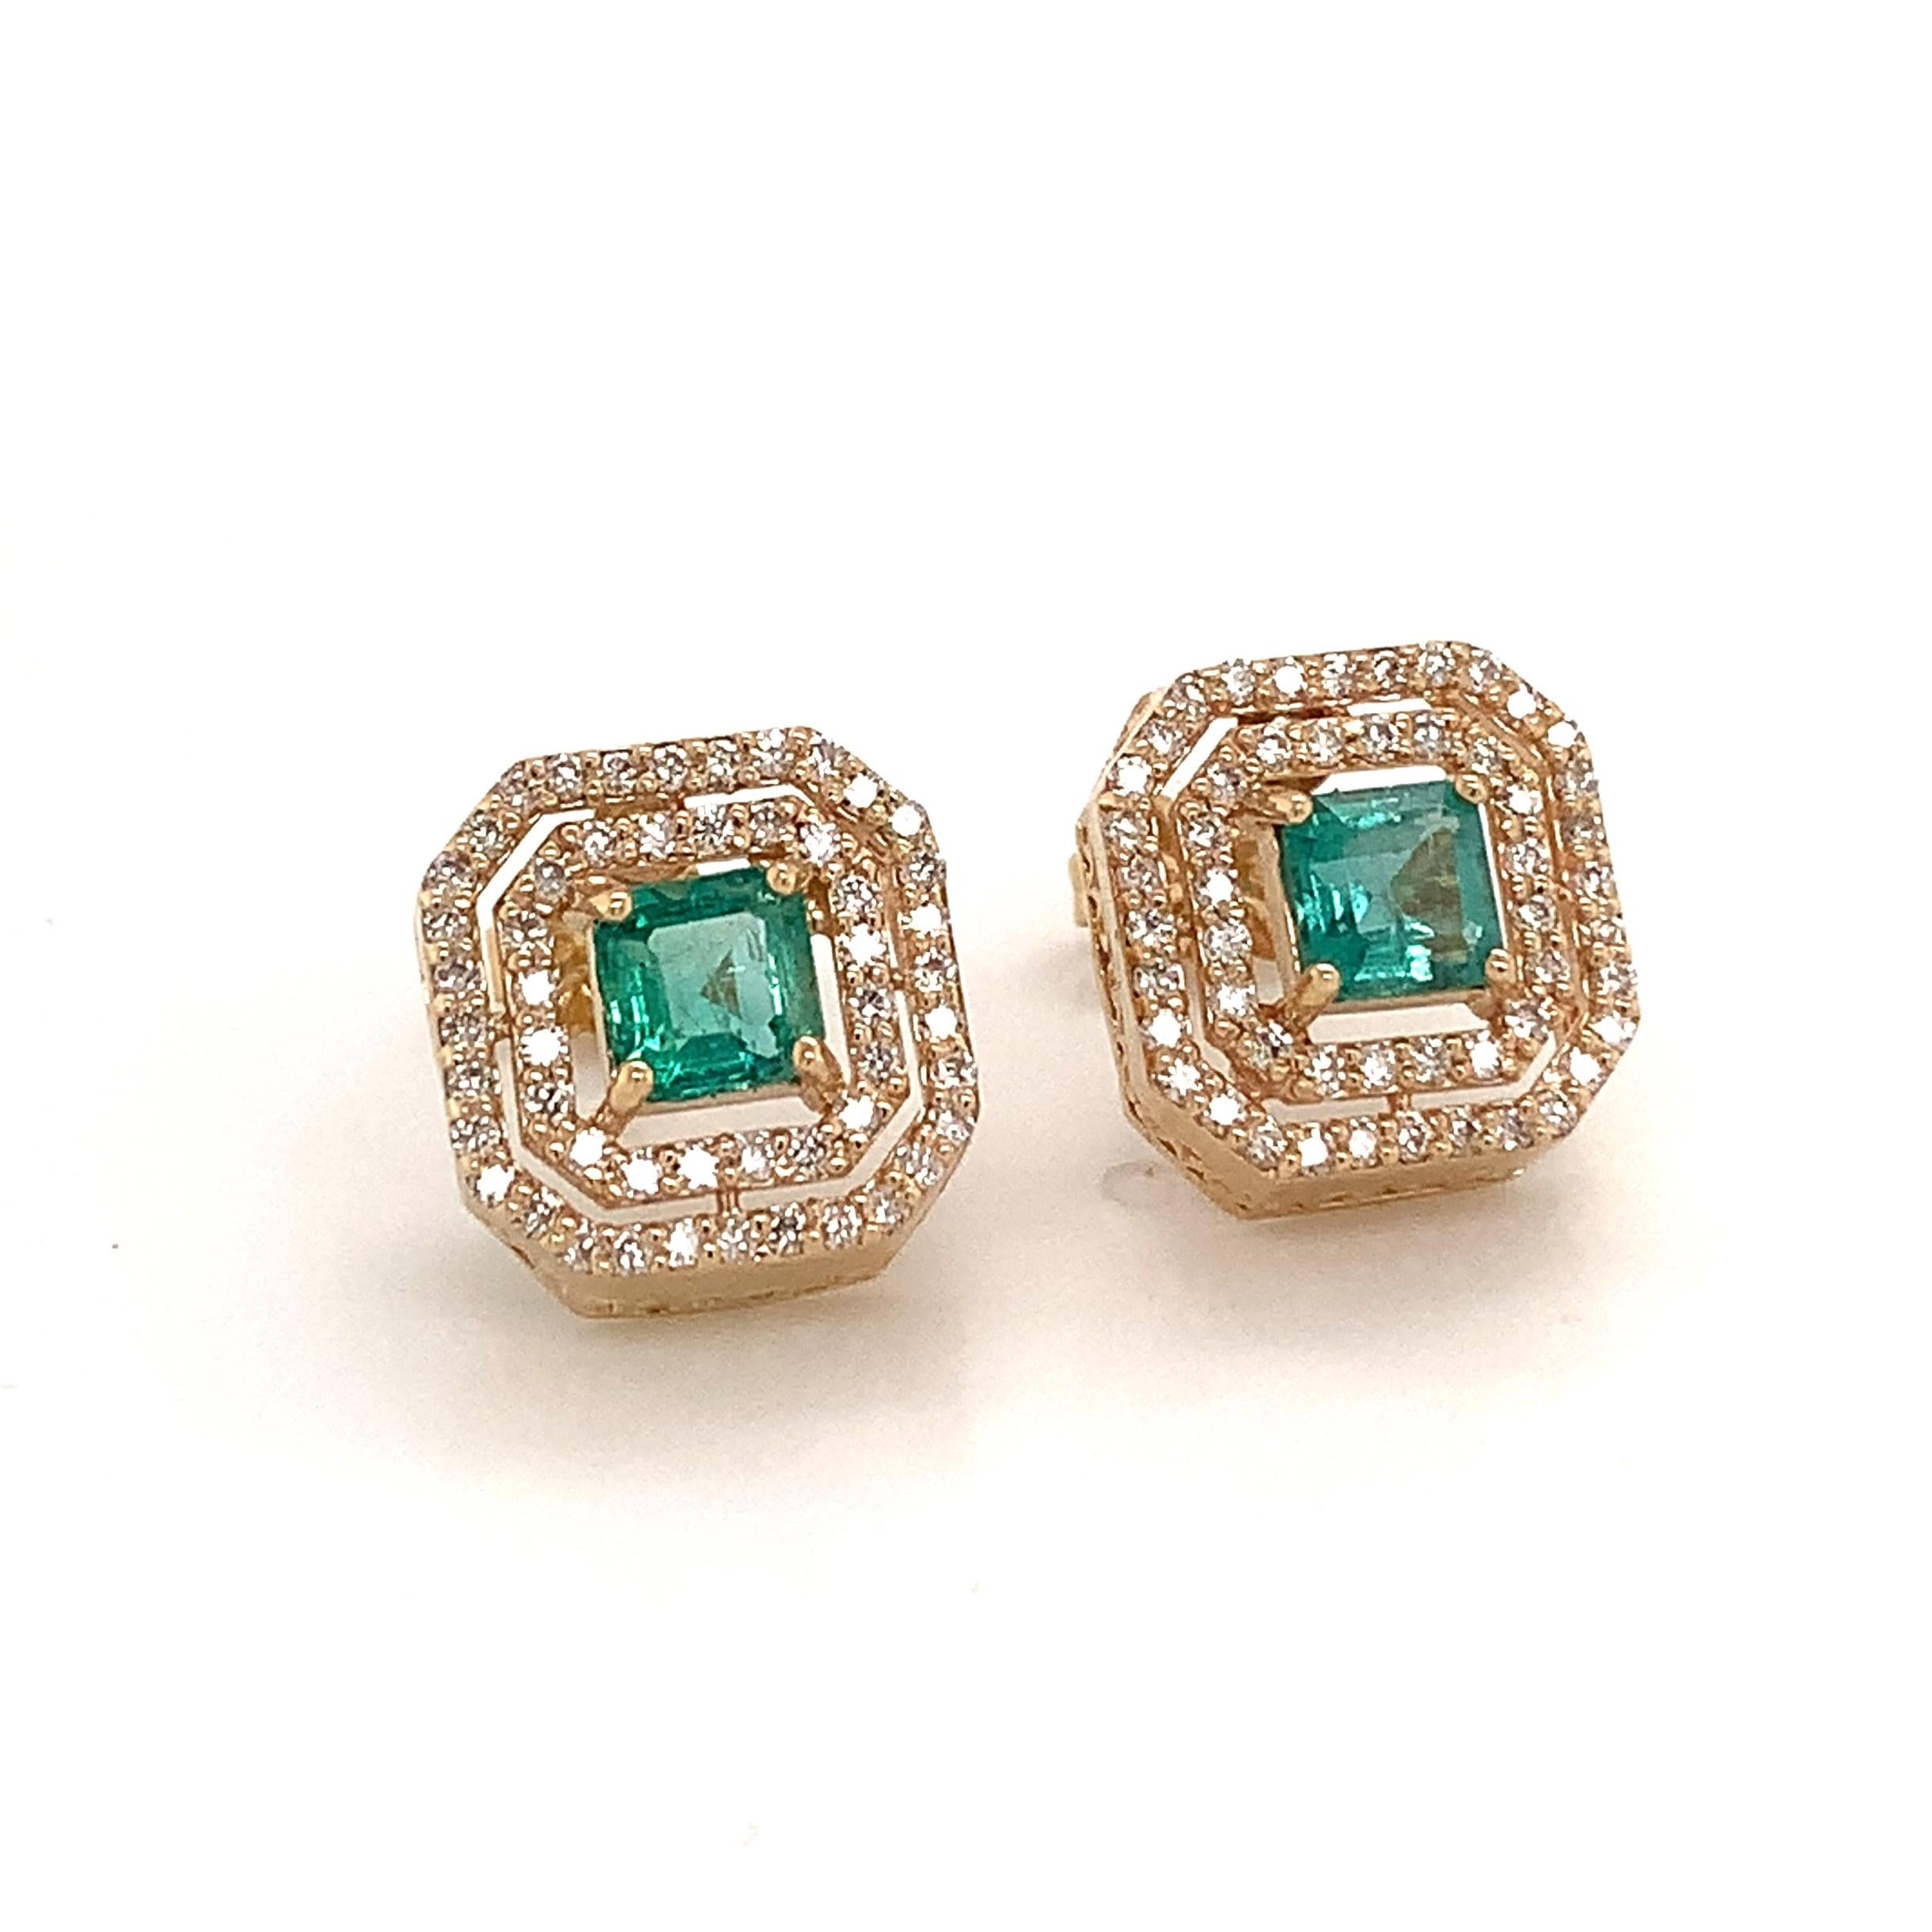 Emerald Cut Natural Emerald Diamond Earrings 14k Gold 1.52 TCW Certified For Sale